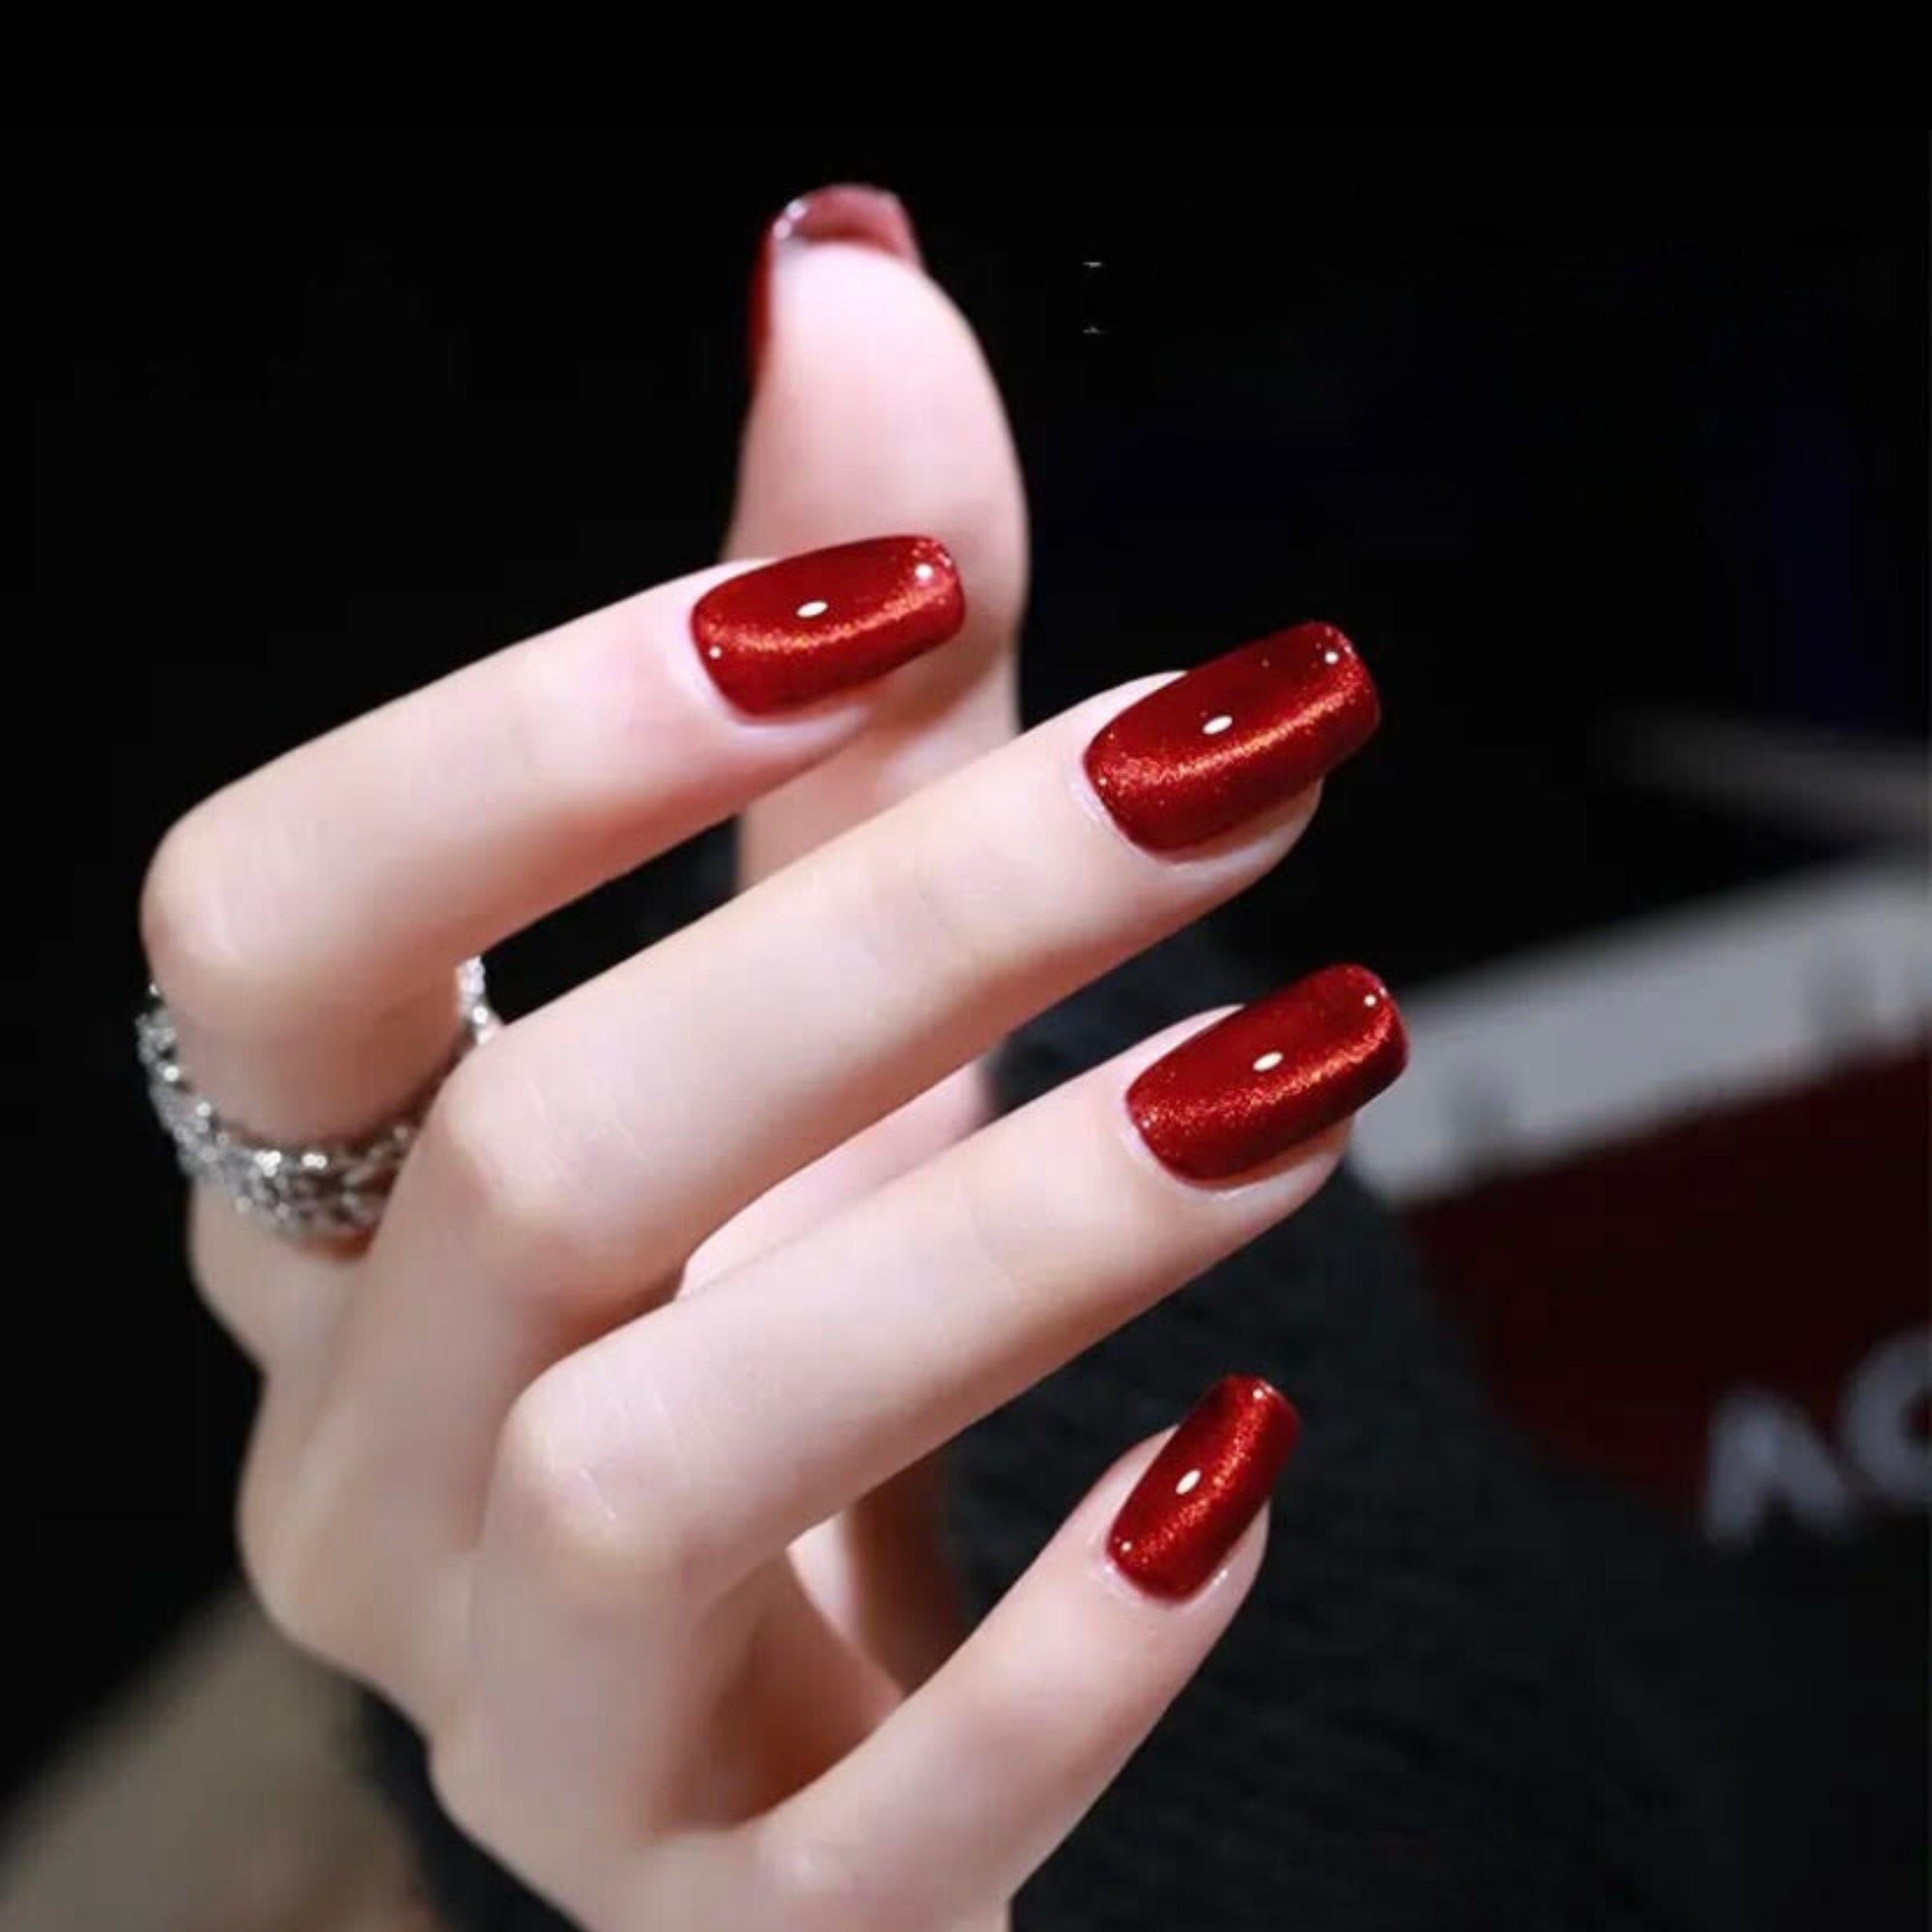 24pcs Red Luxury Nail Charms +2000pcs Ruby Red Rhinestones 3D Big Nail Gems  K9 Glass